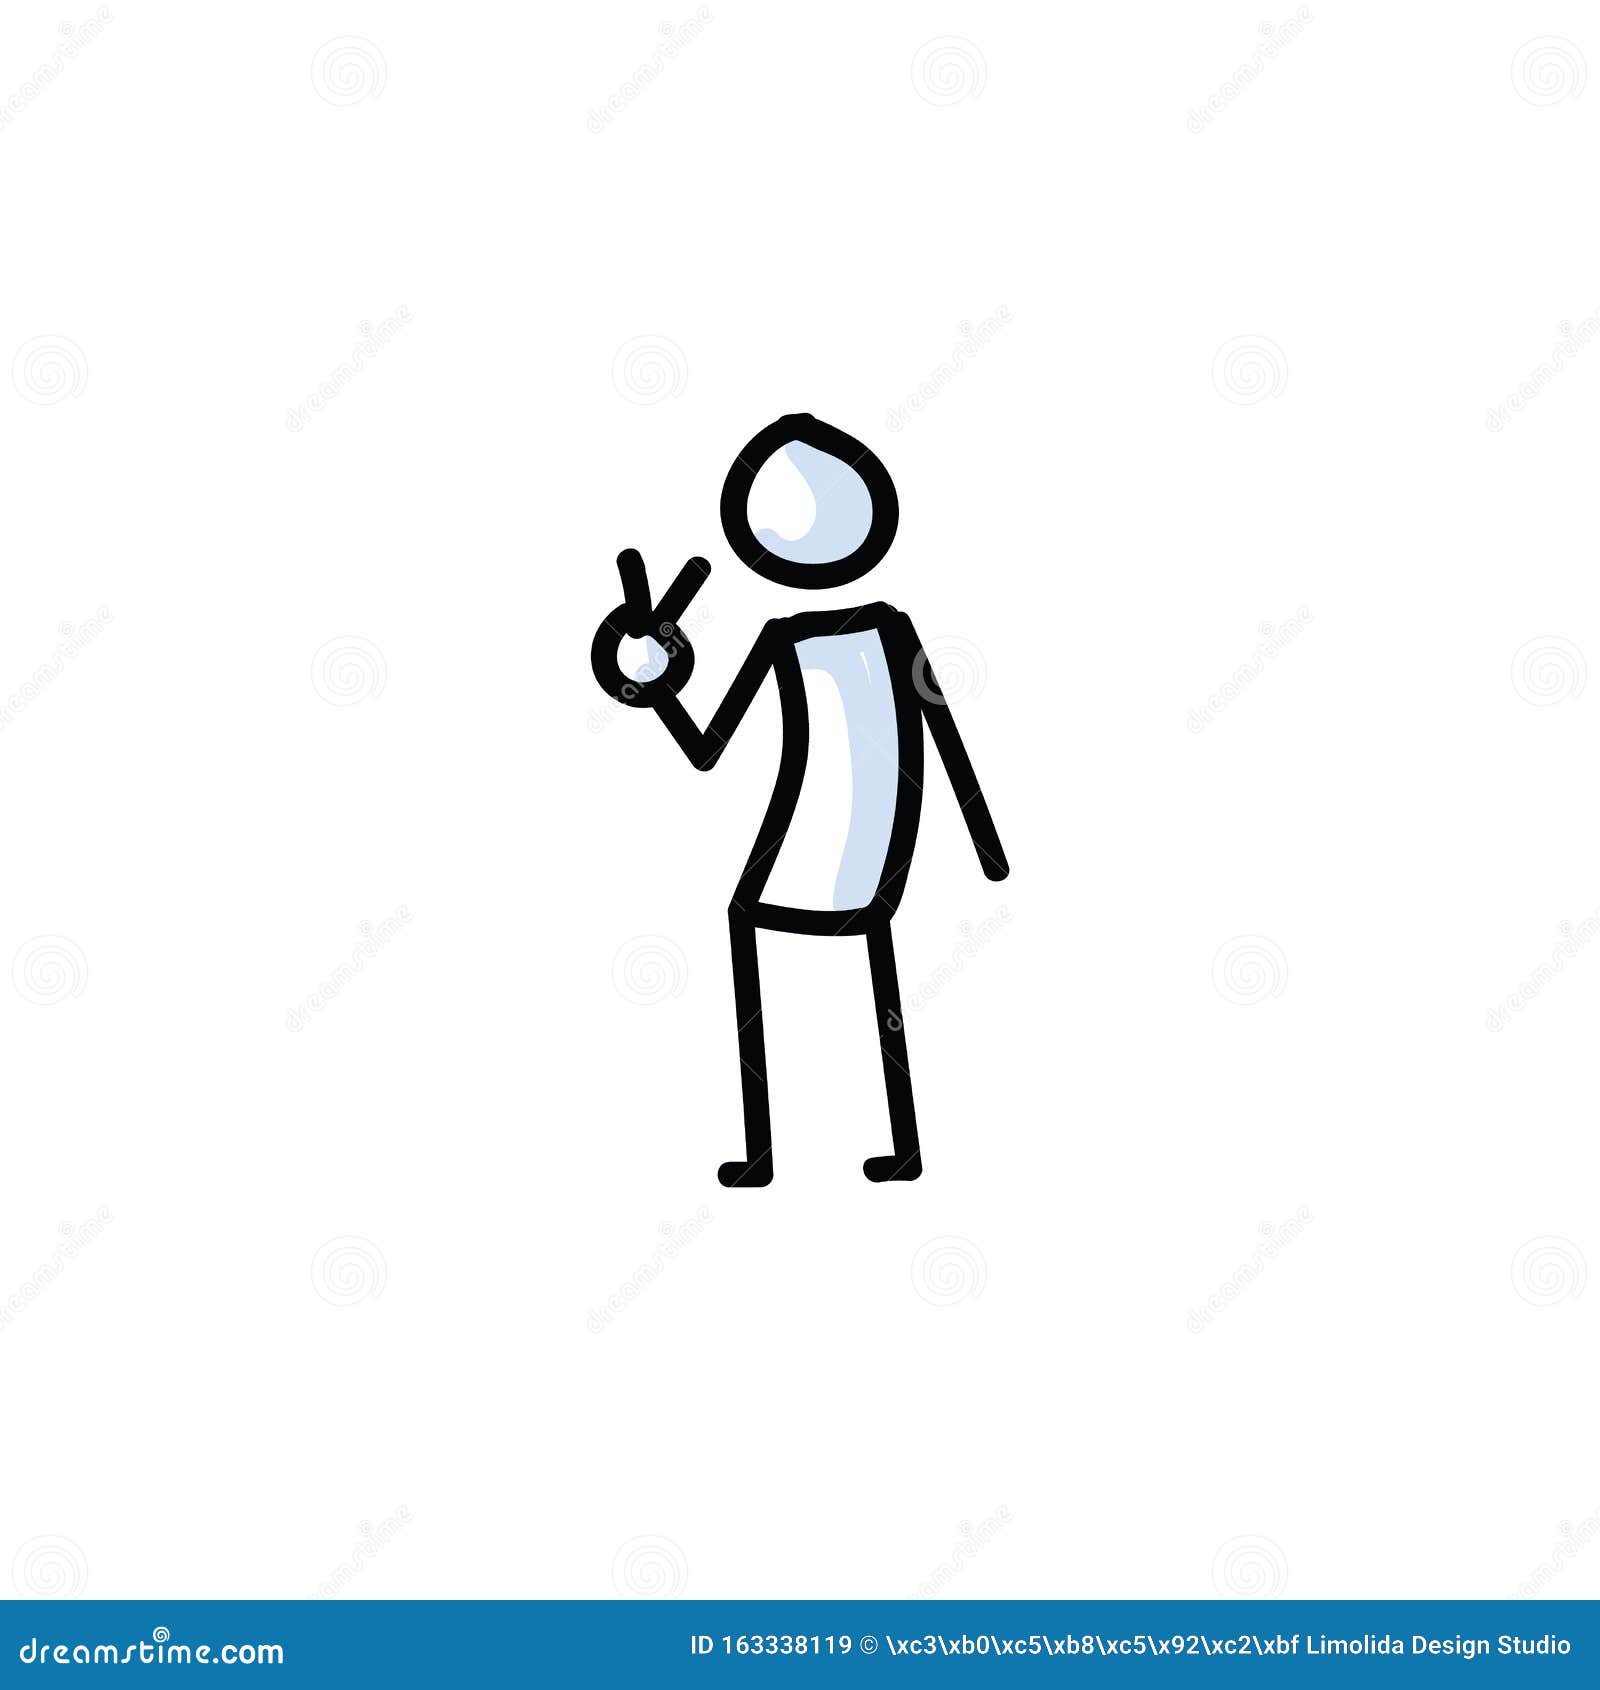 Peace Sign Stick Figure Vector Illustration. Hand Drawn V for